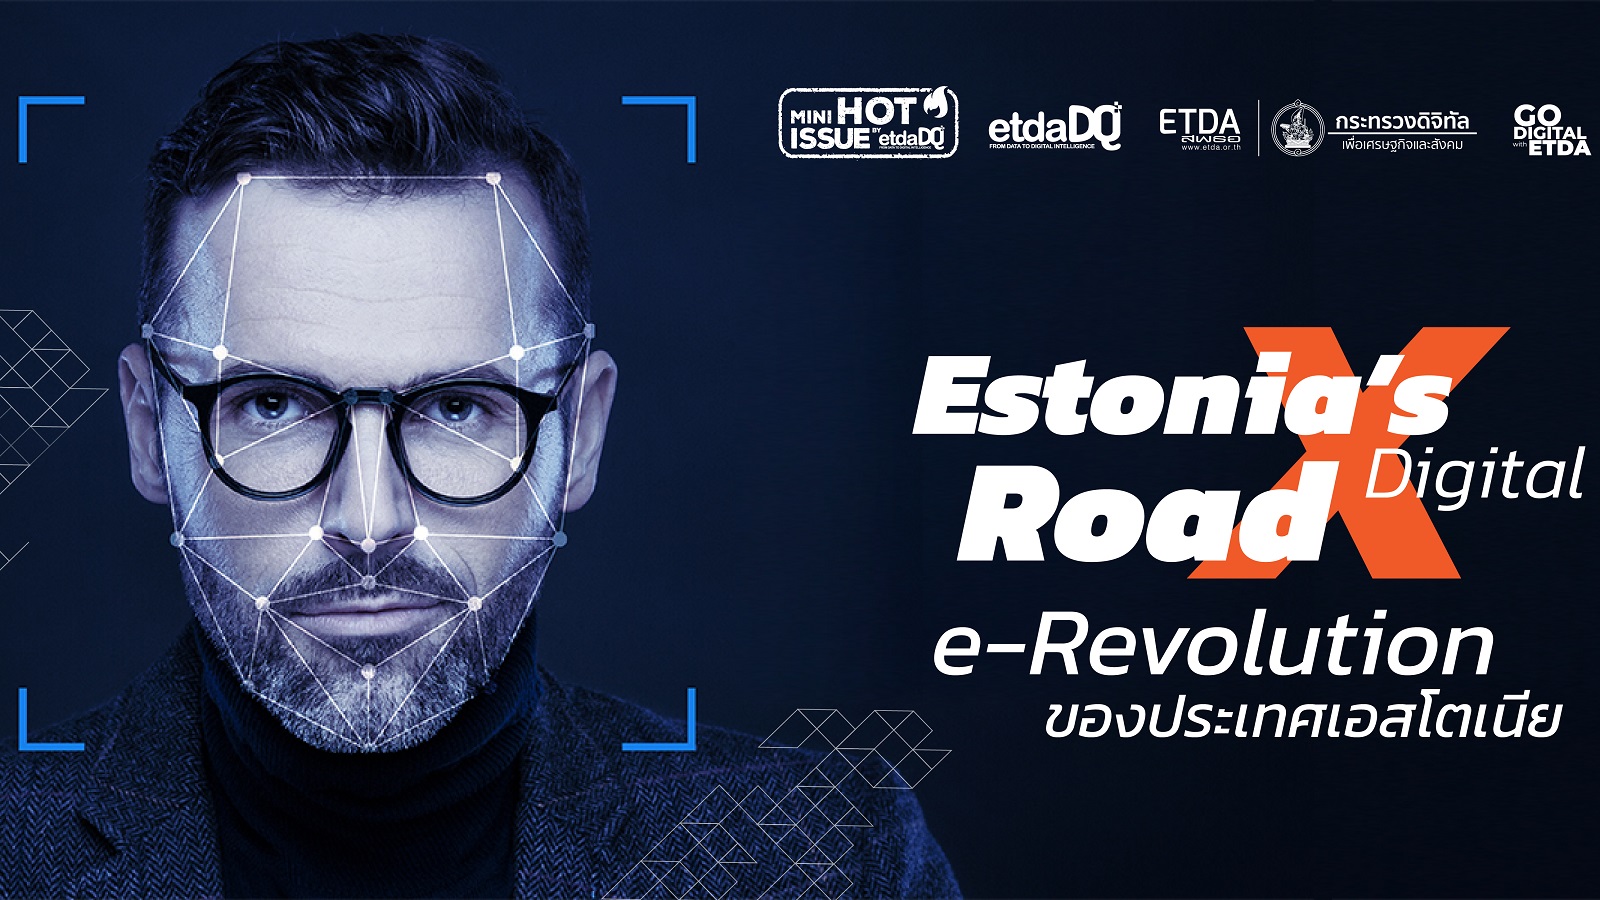 Estonia’s Digital X Road: e-Revolution ของประเทศเอสโตเนีย